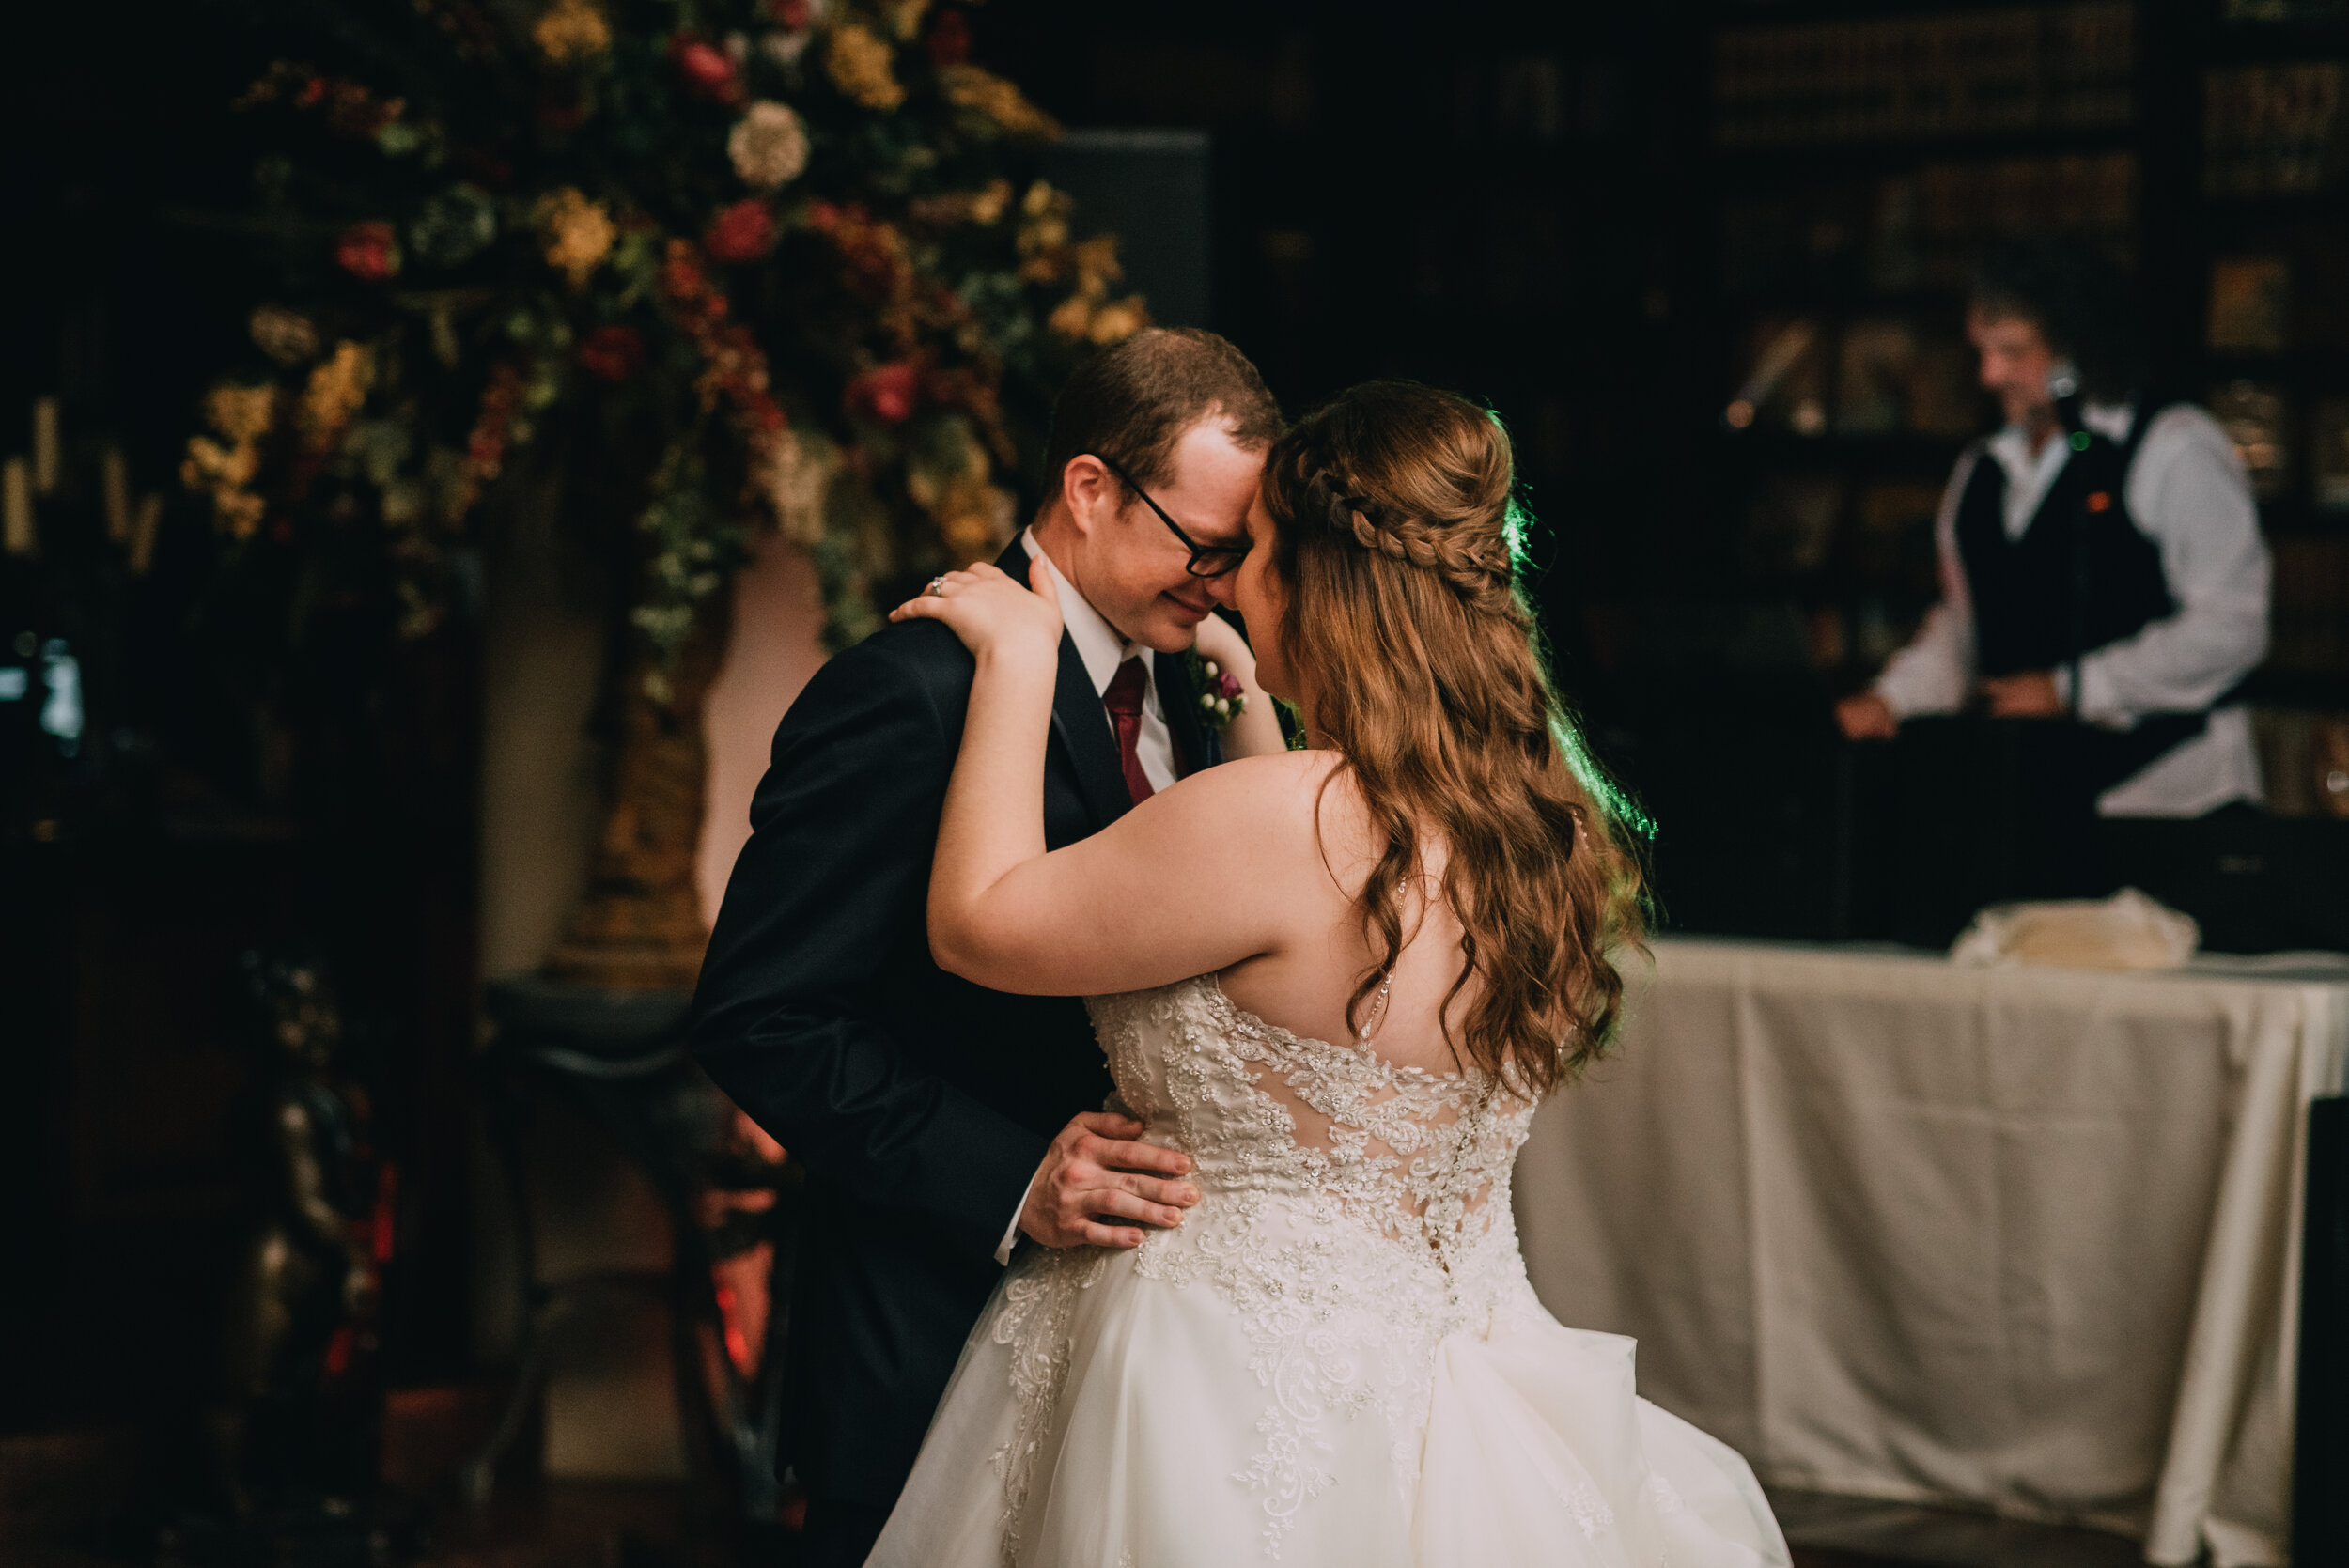 Tate and Summer Nicks Wedding 2019 (Austin Daniel Photo) (559 of 672).JPG